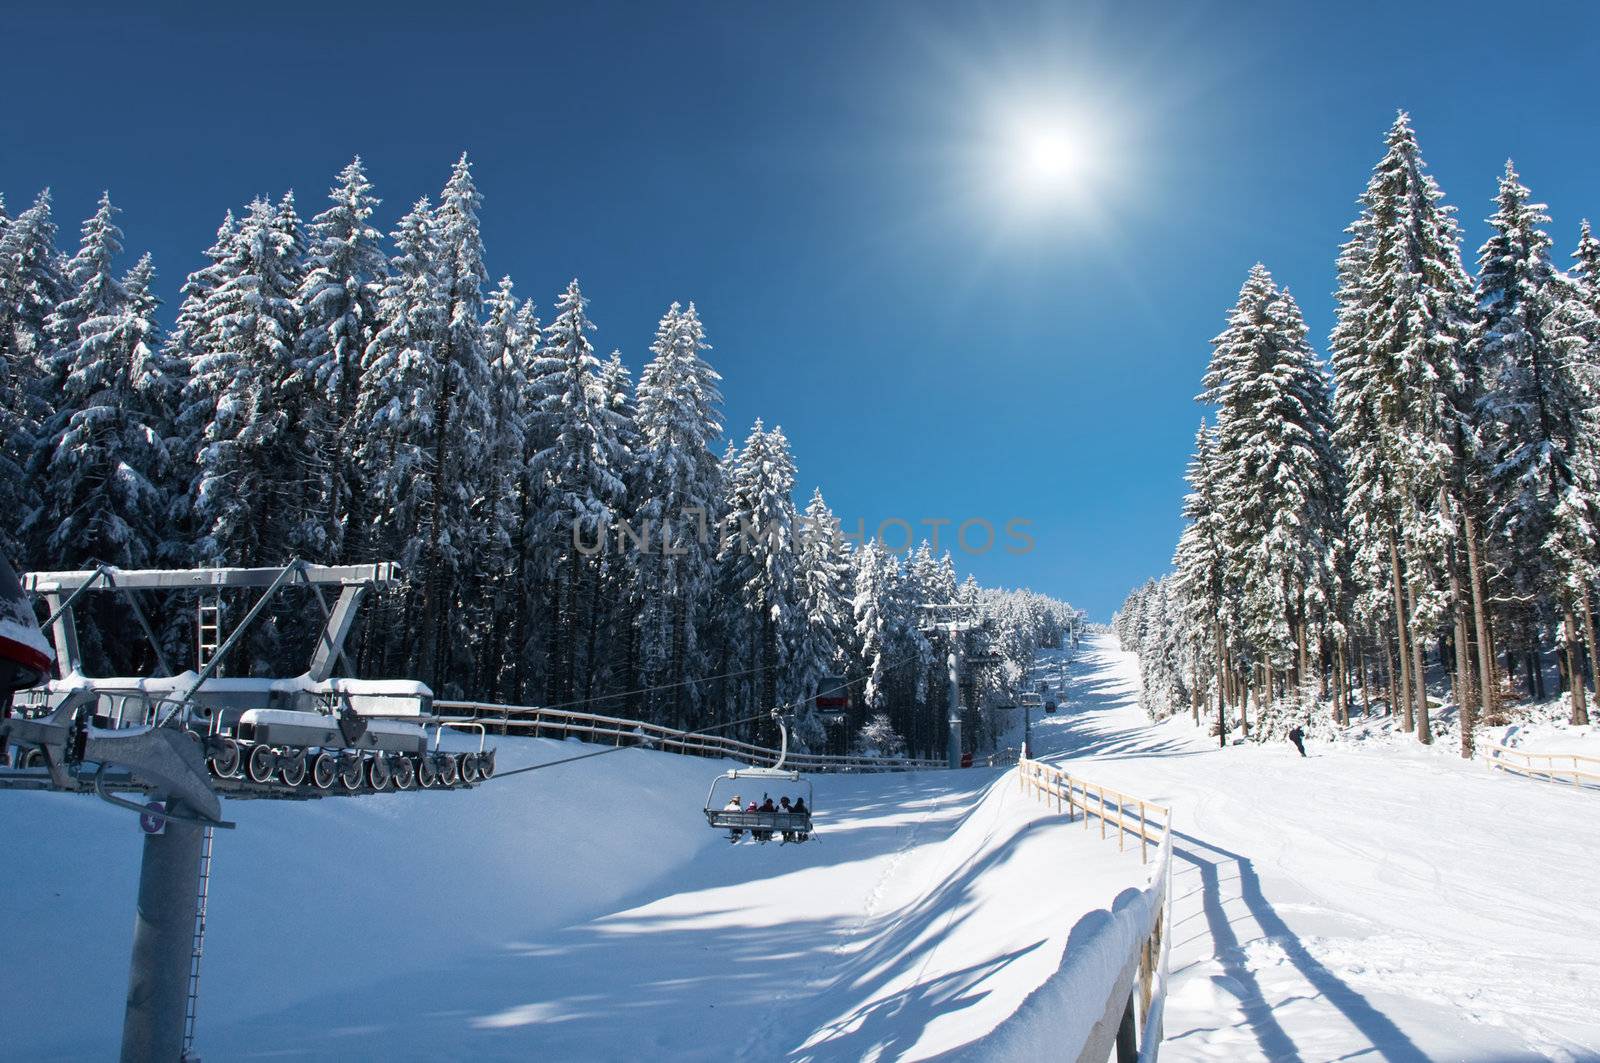 Ski Resort with Sun and blue Sky, taken in Austria